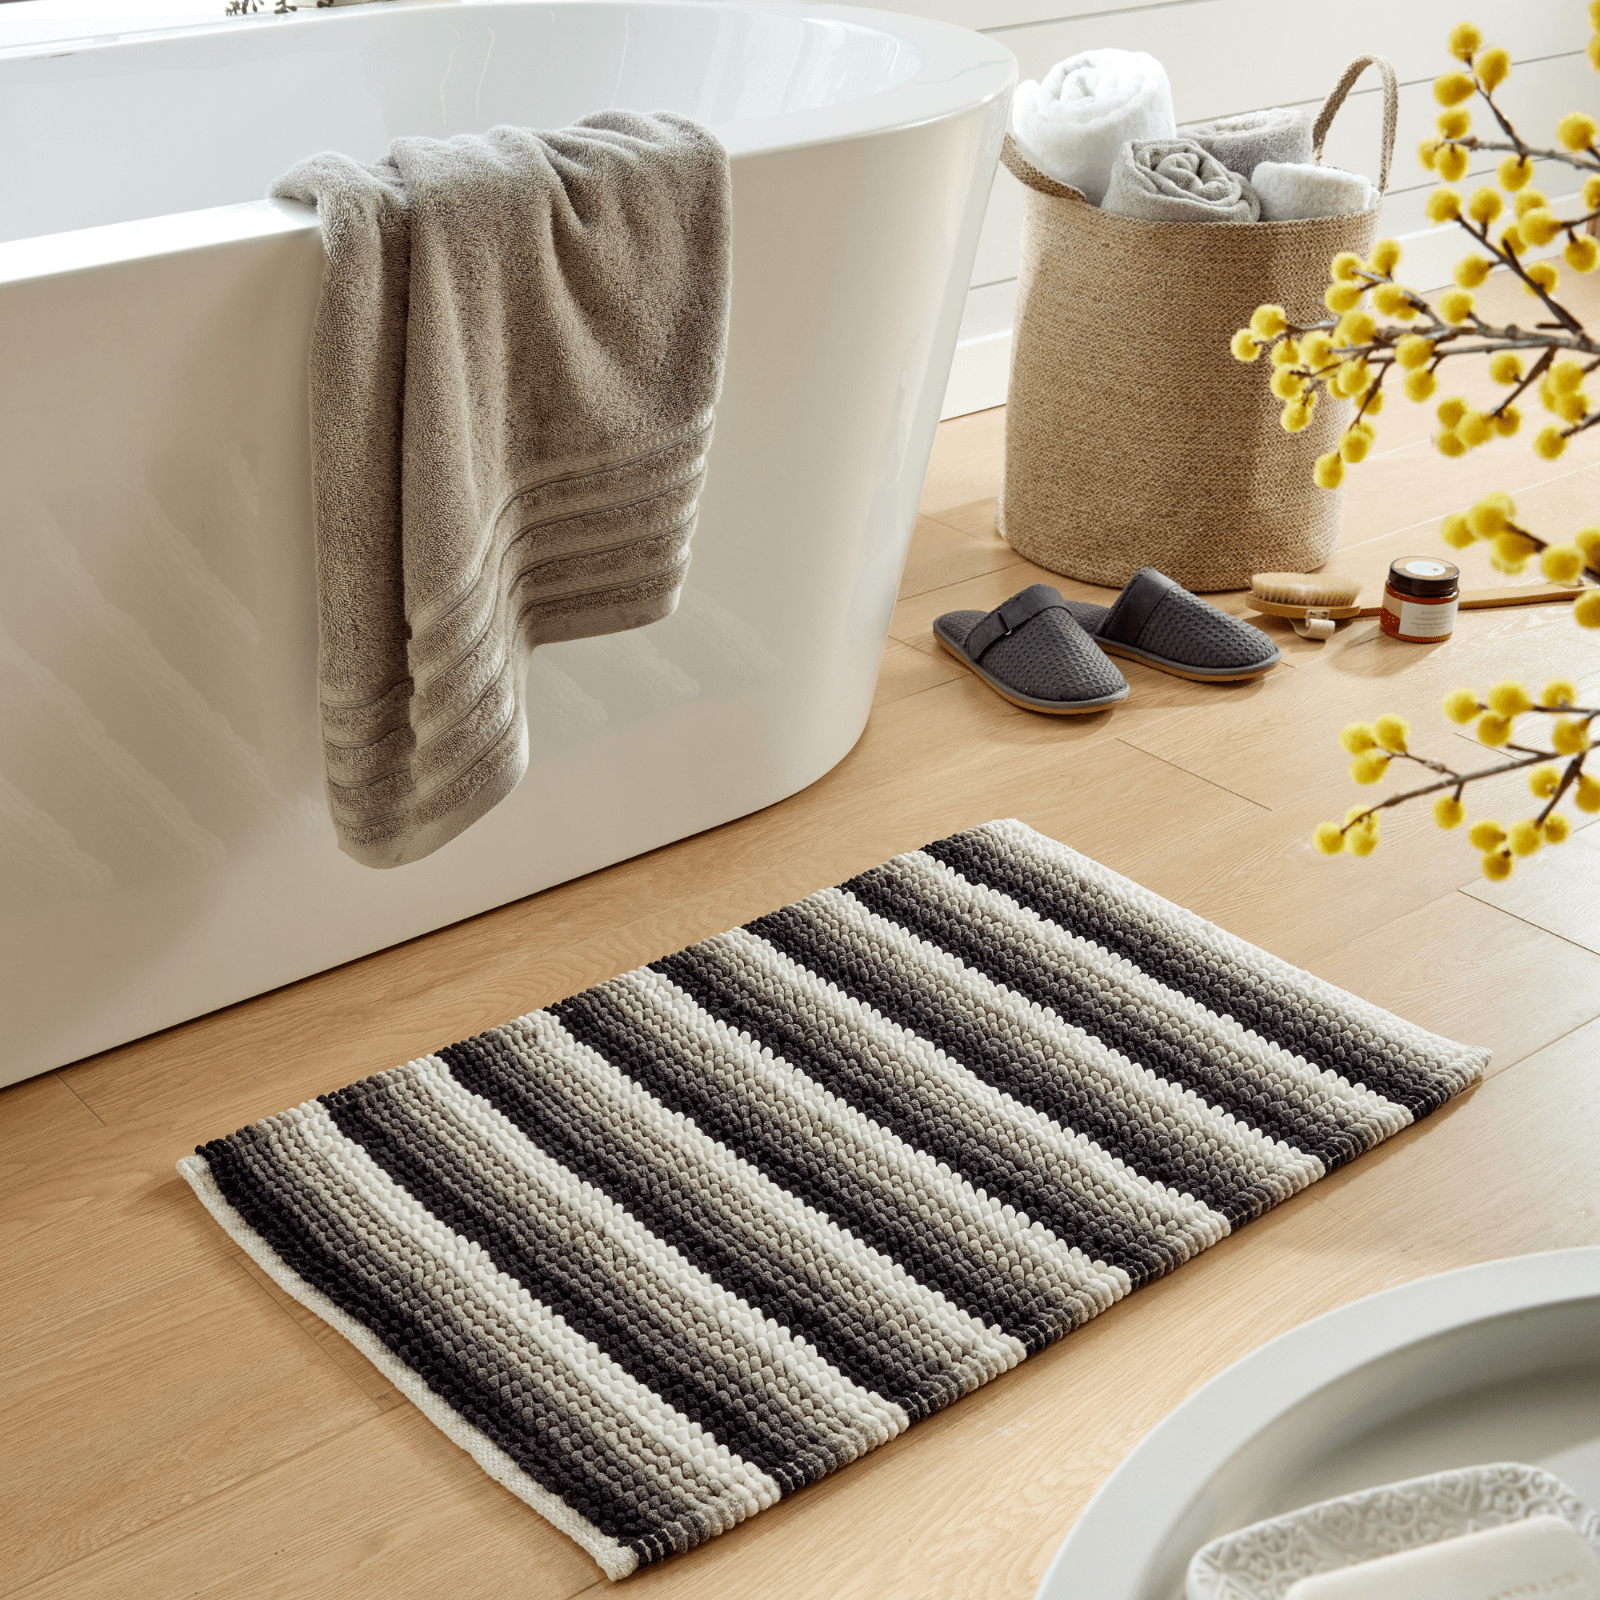 Padstow Stripe Bathmat, Super Soft & Absorbent Bath Mats OLIVIA ROCCO Bath Mat